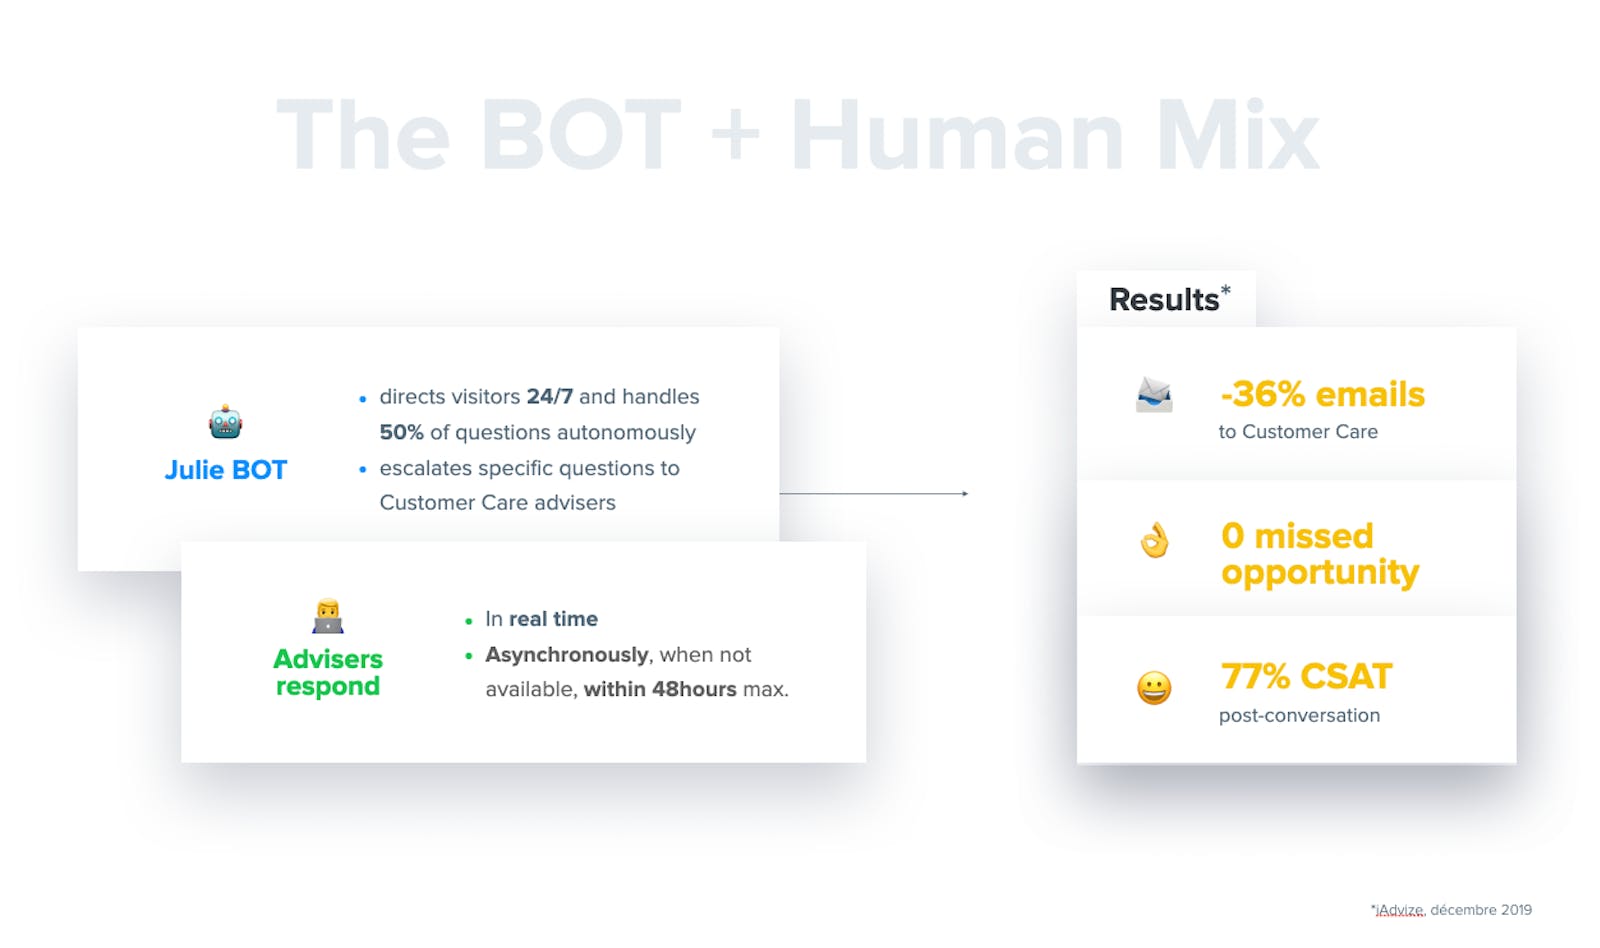  The Bot + Human Mix